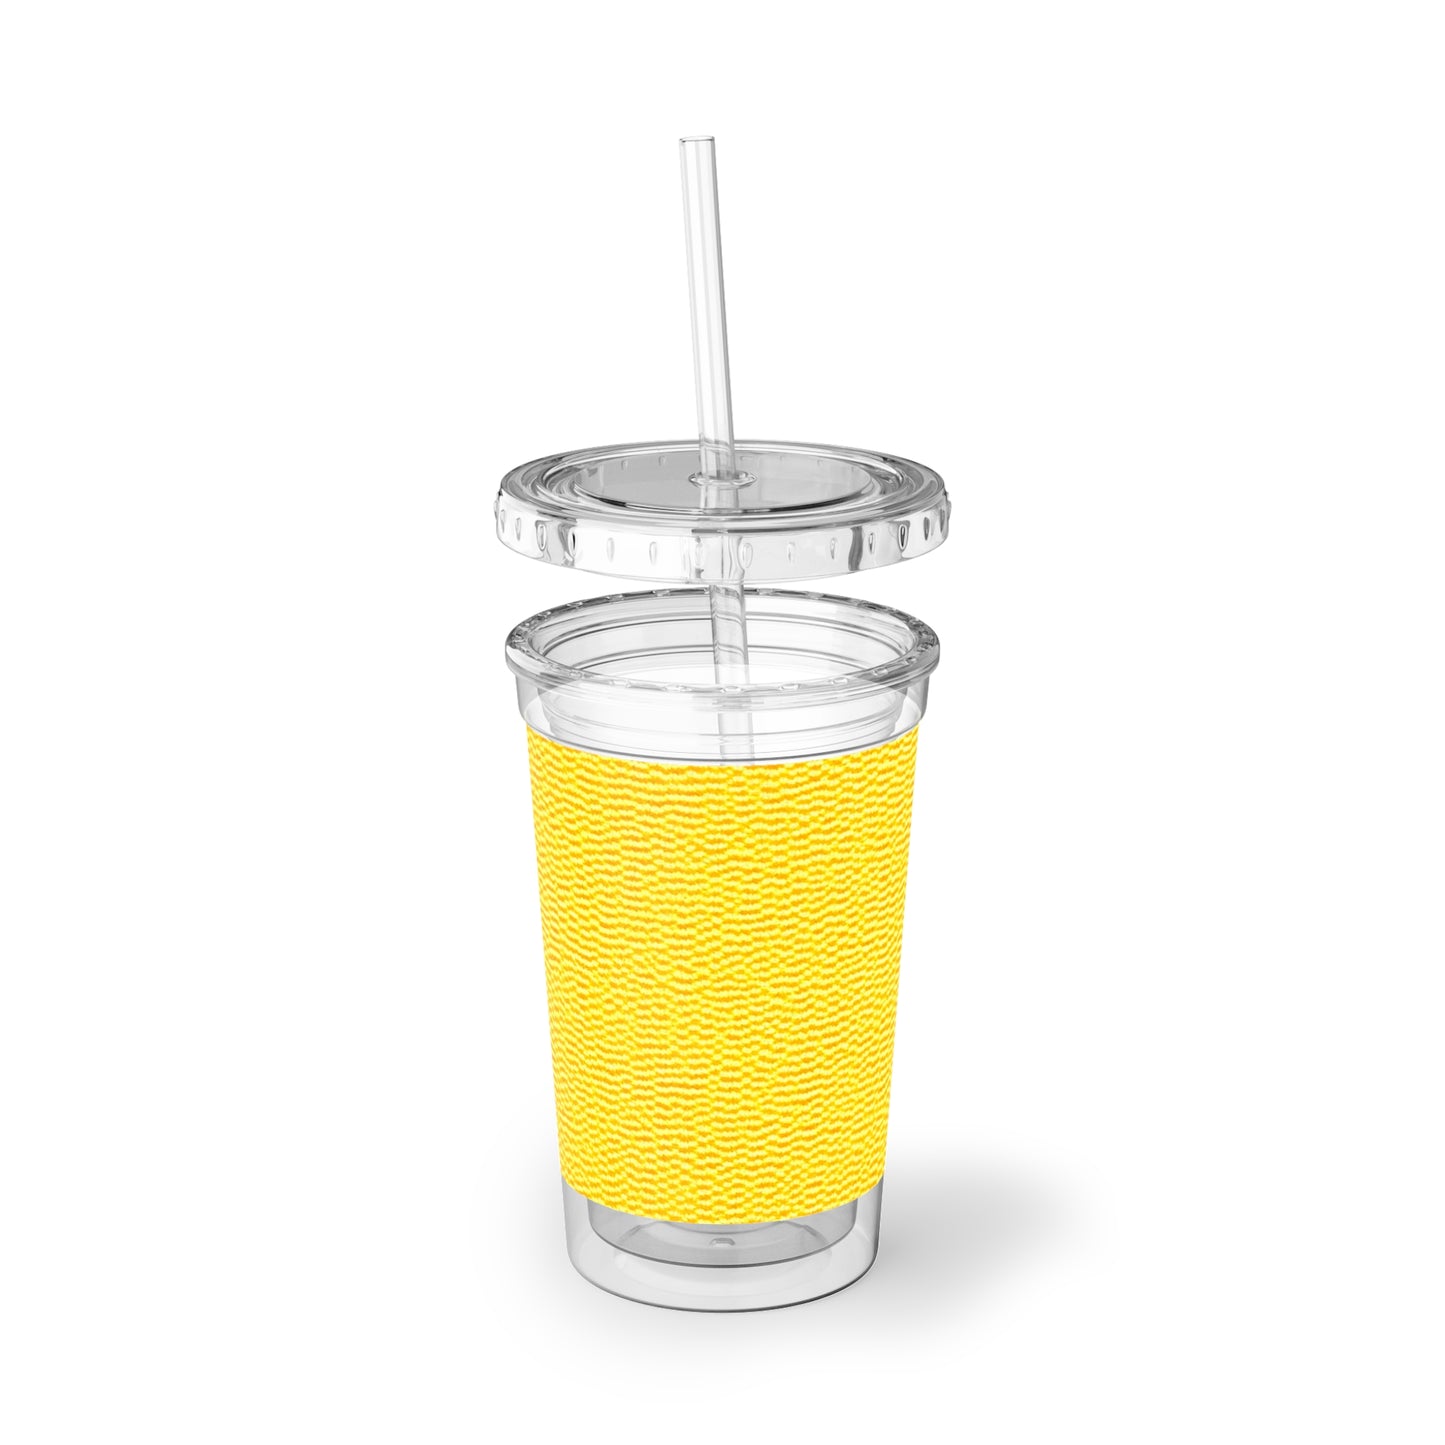 Sunshine Yellow Lemon: Denim-Inspired, Cheerful Fabric - Suave Acrylic Cup